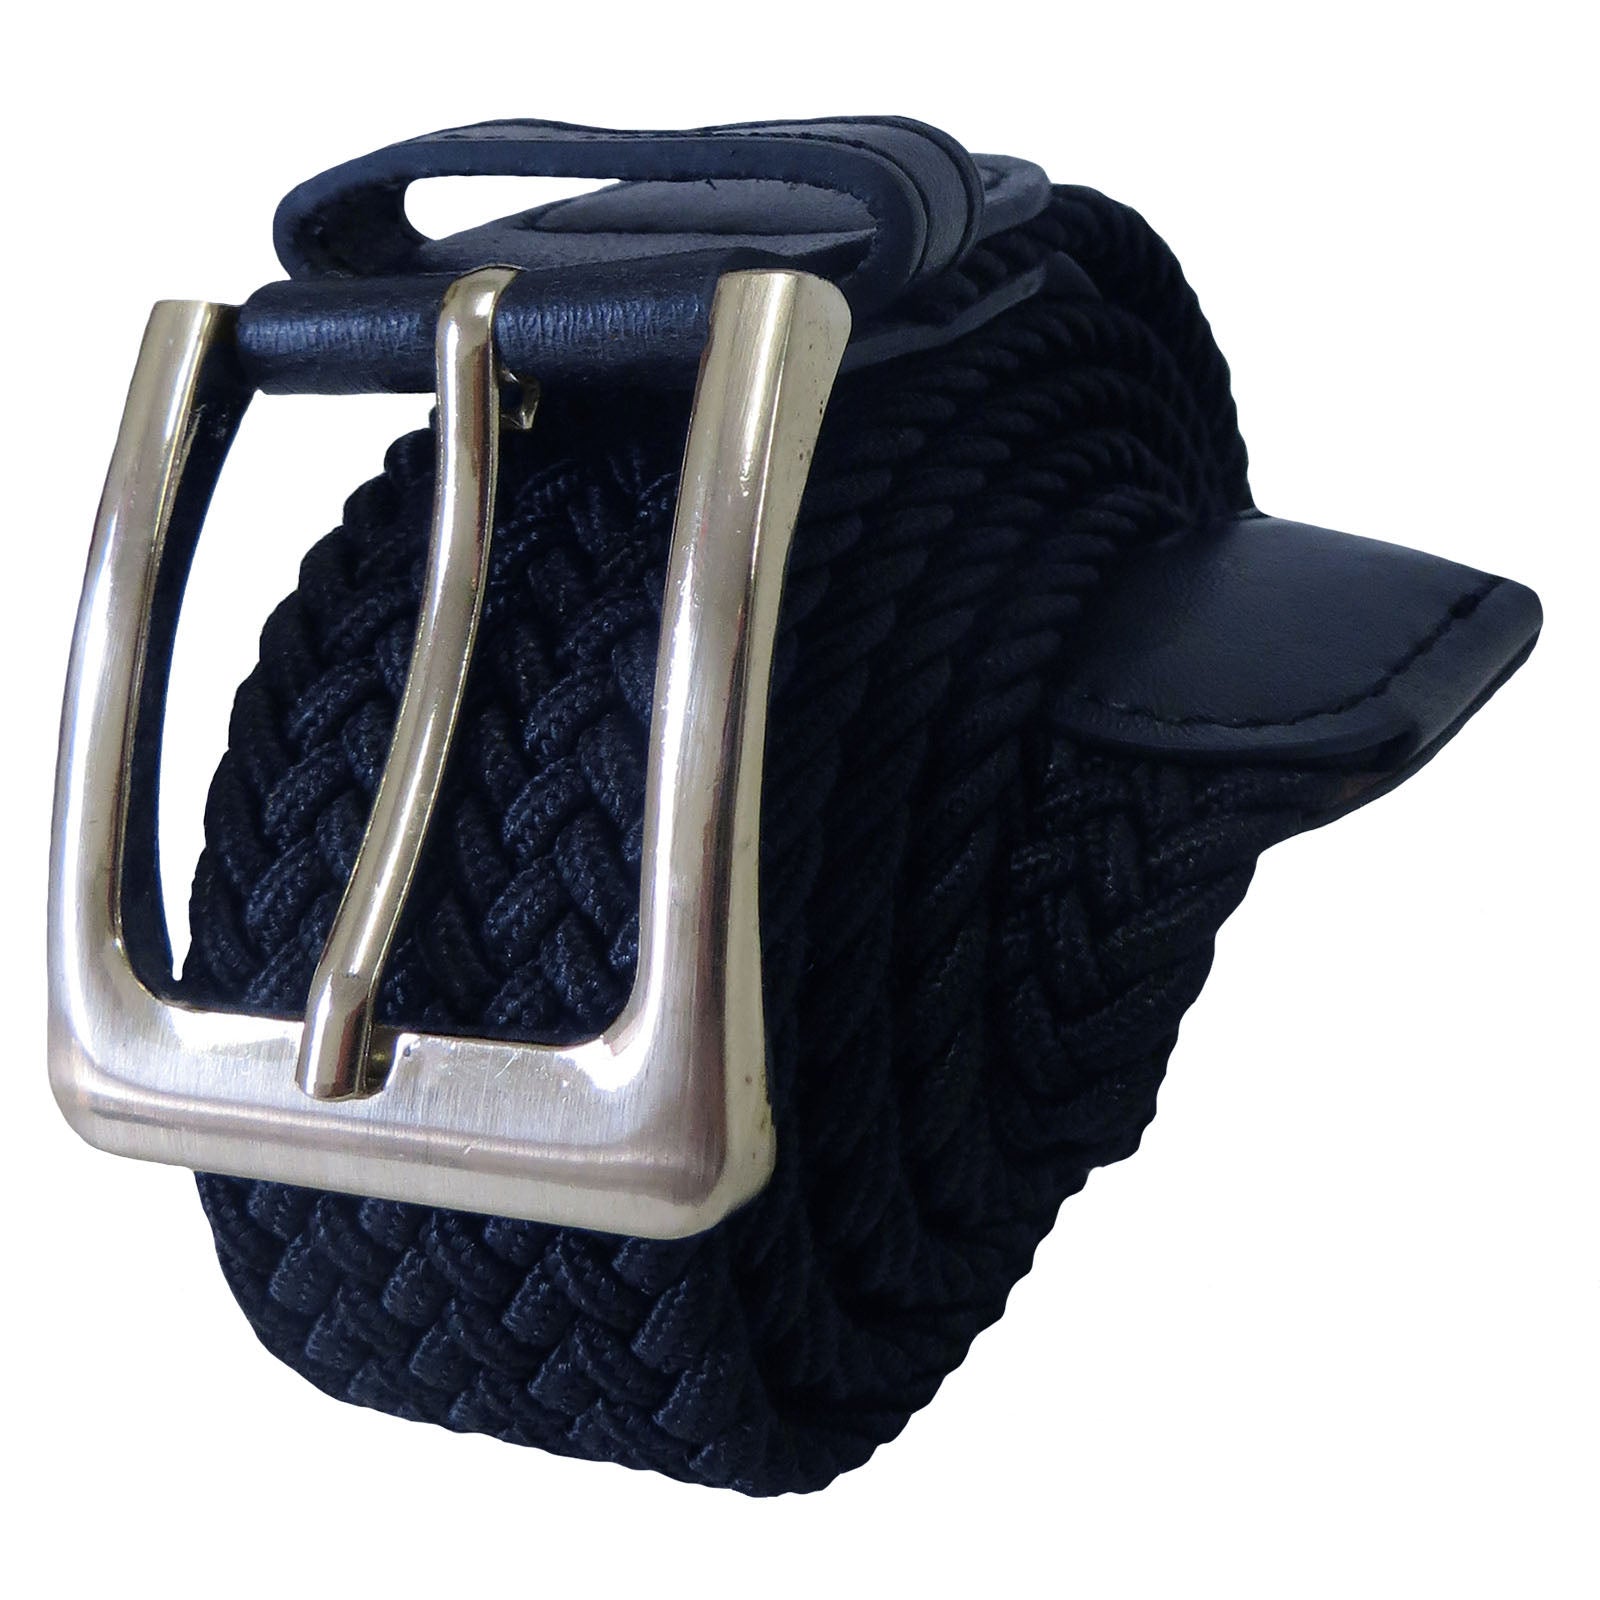 Wholesale Men's Elastic Casual Stretch Golf Belt in Navy Blue